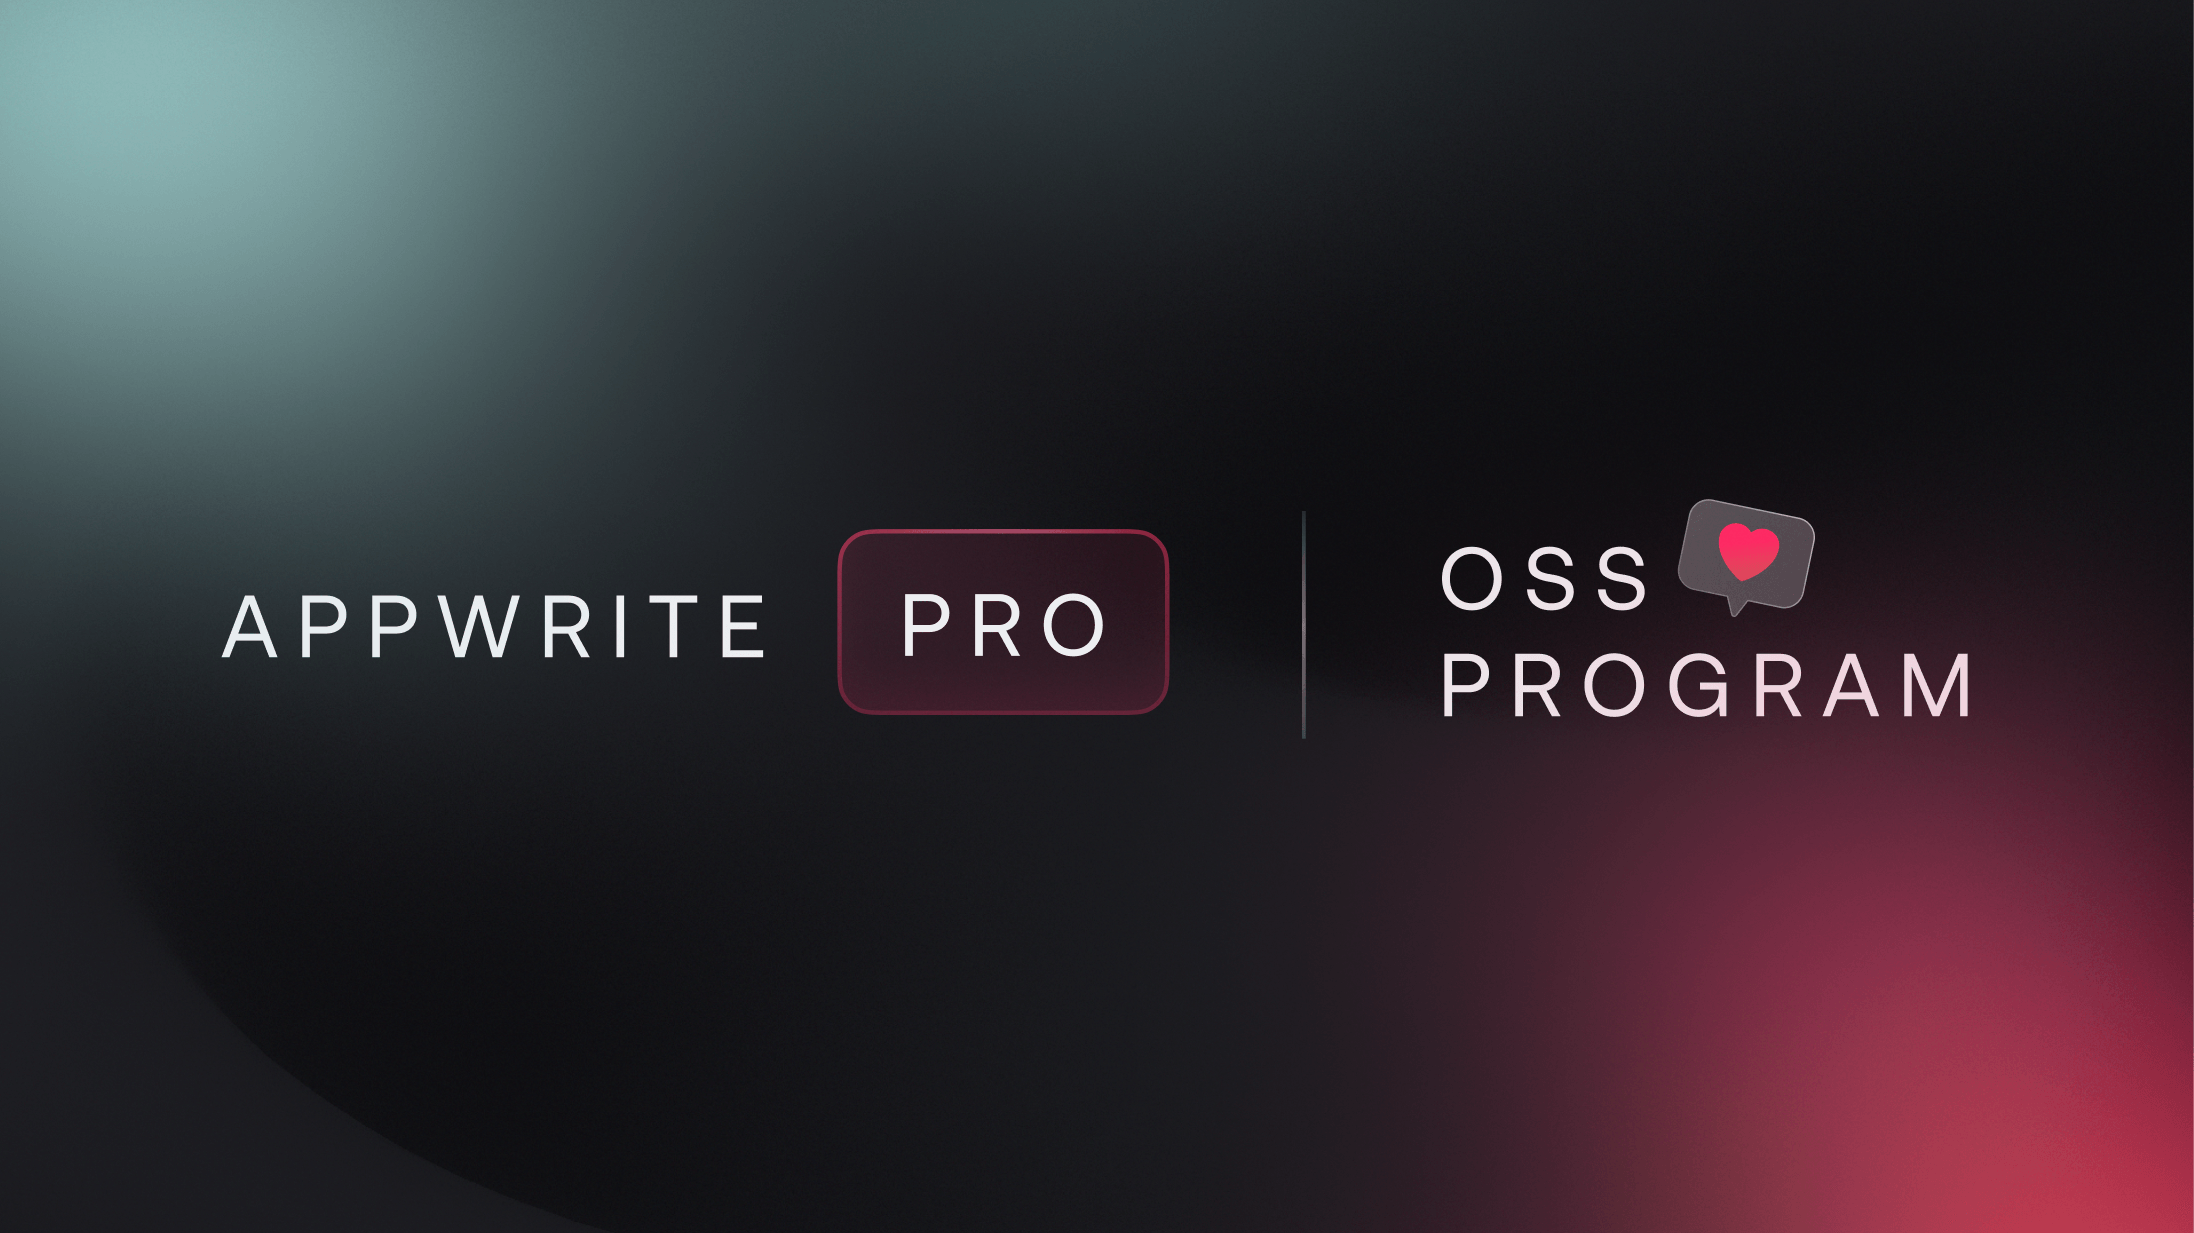 Announcing the Appwrite OSS Program